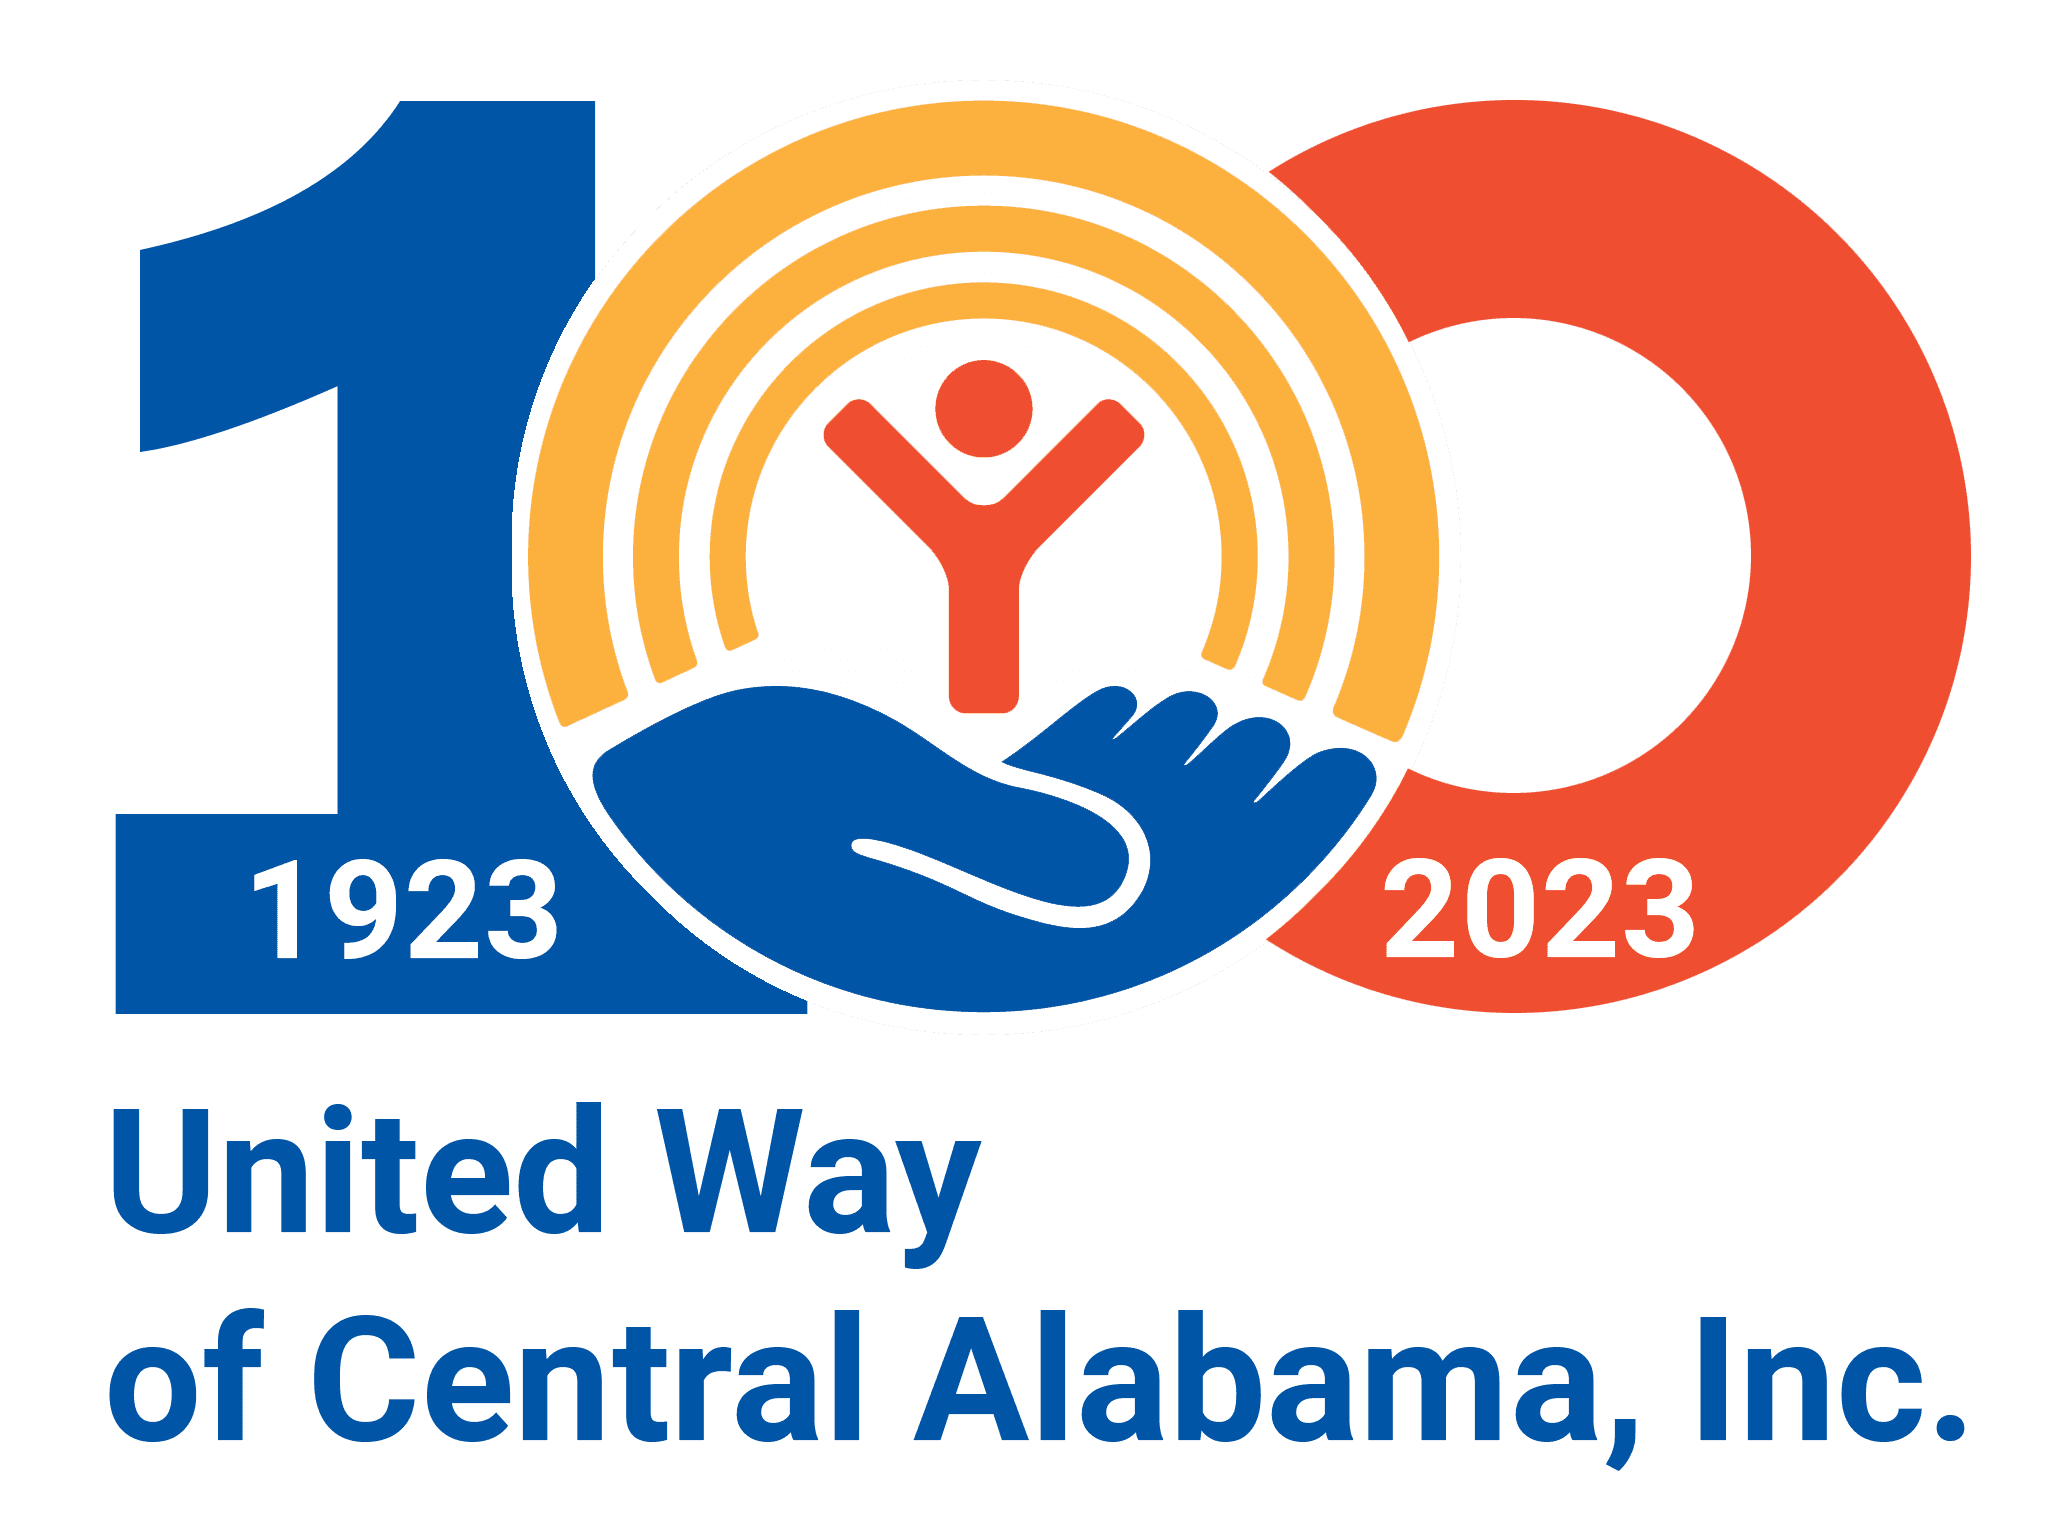 United Way Central Alabama